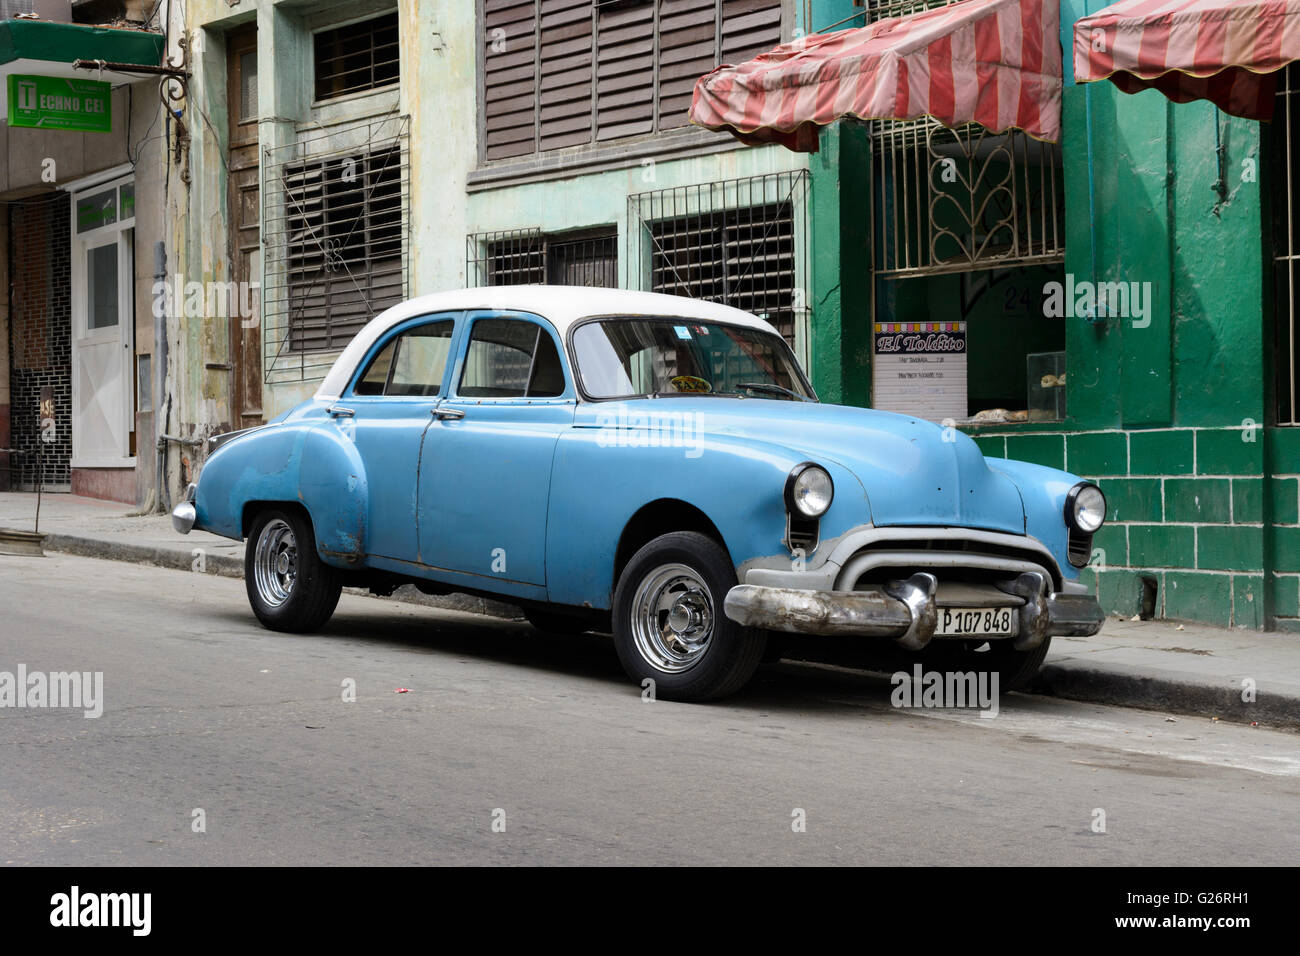 Vintage American car in Havana, Cuba Stock Photo